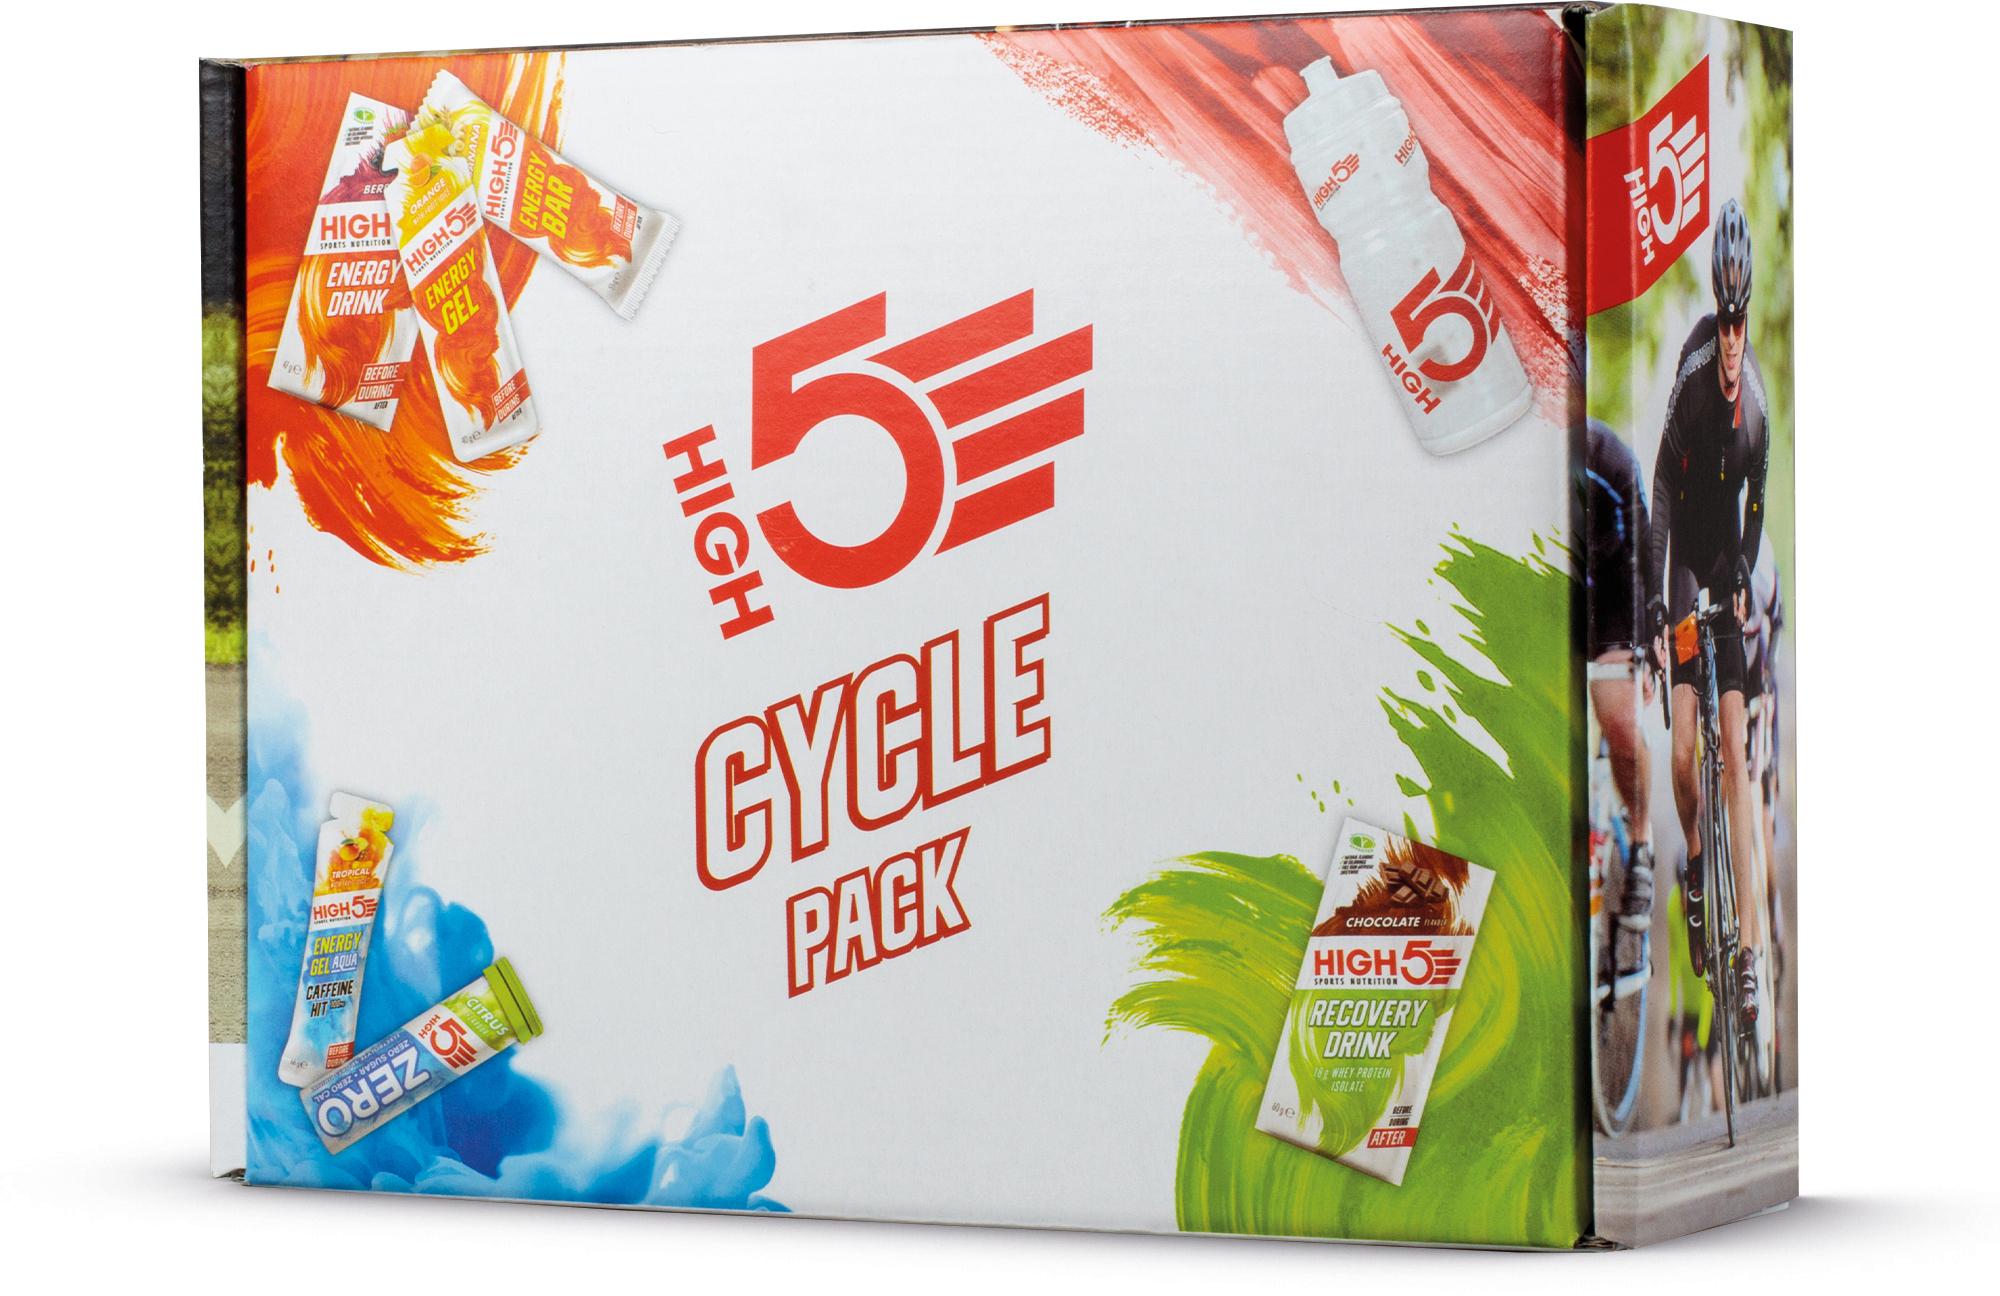 high 5 cycle pack aldi